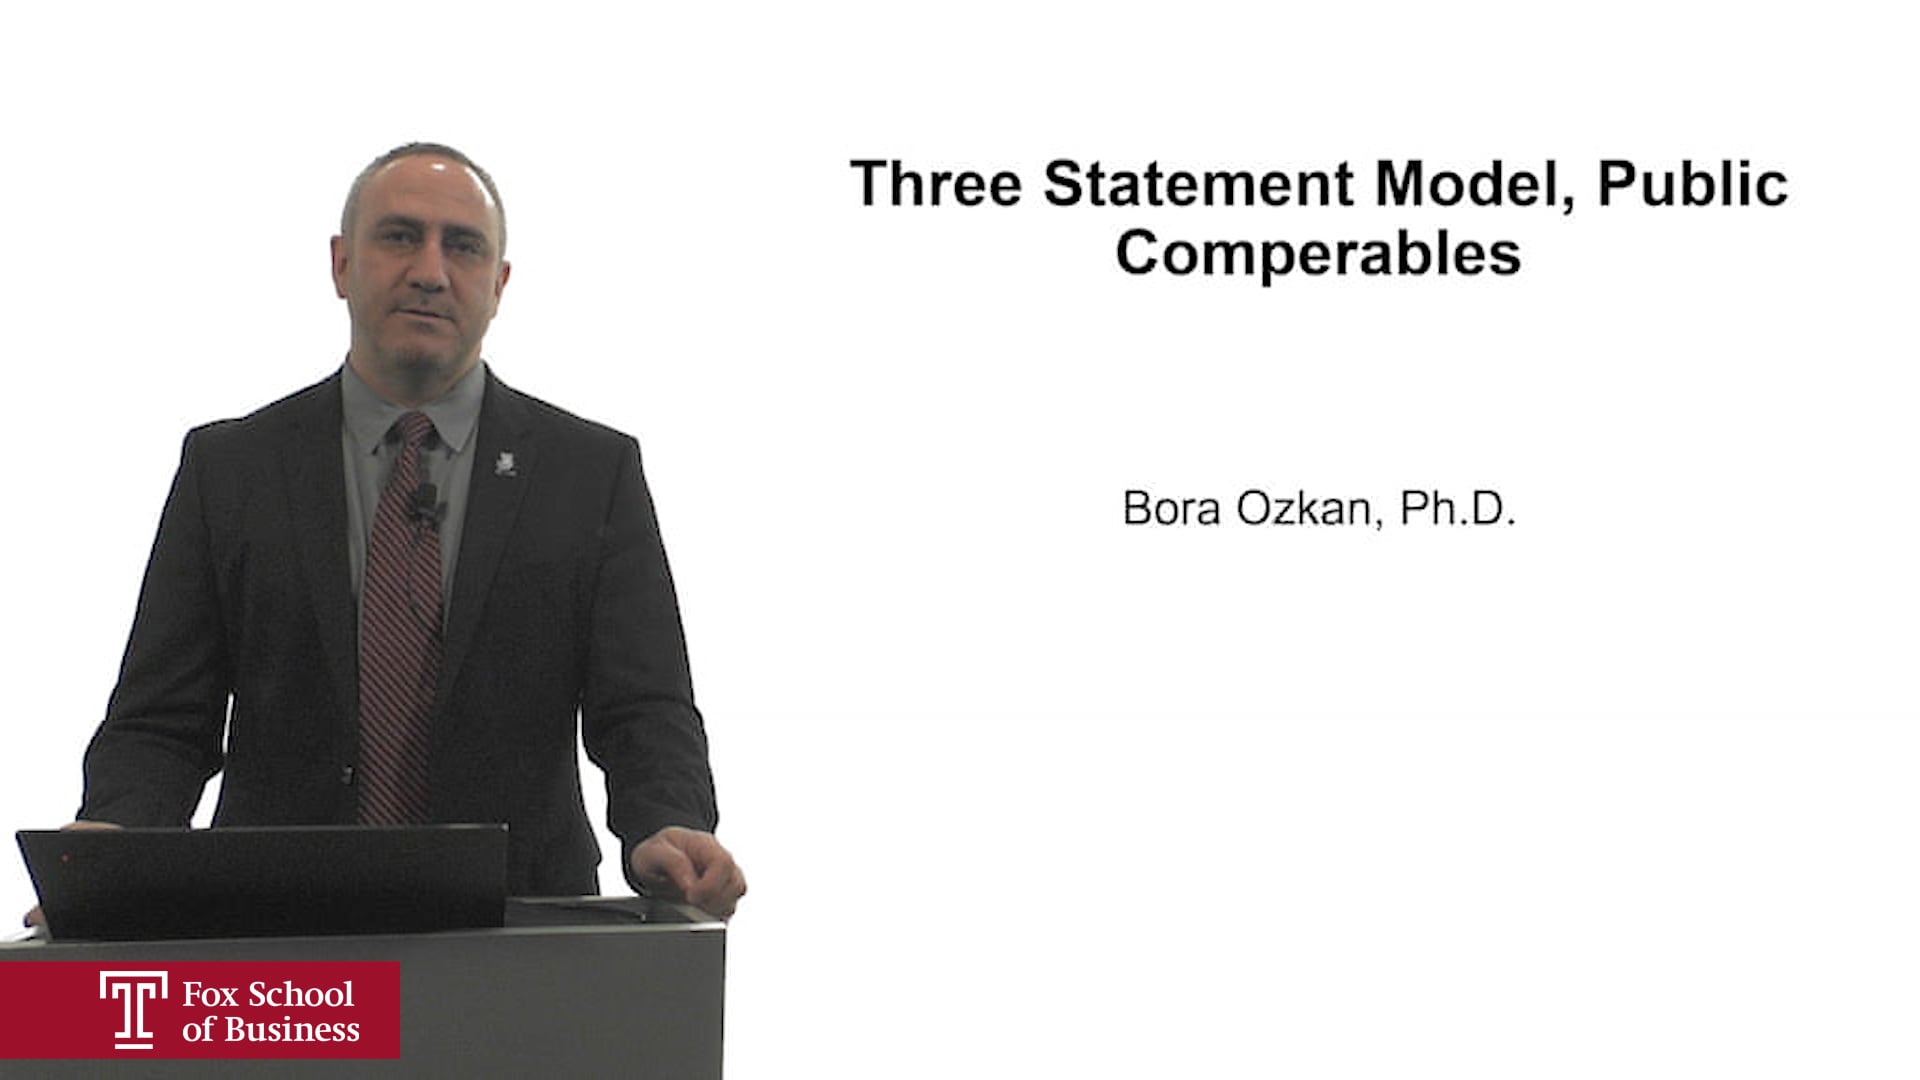 Three Statement Model, Public Comperables